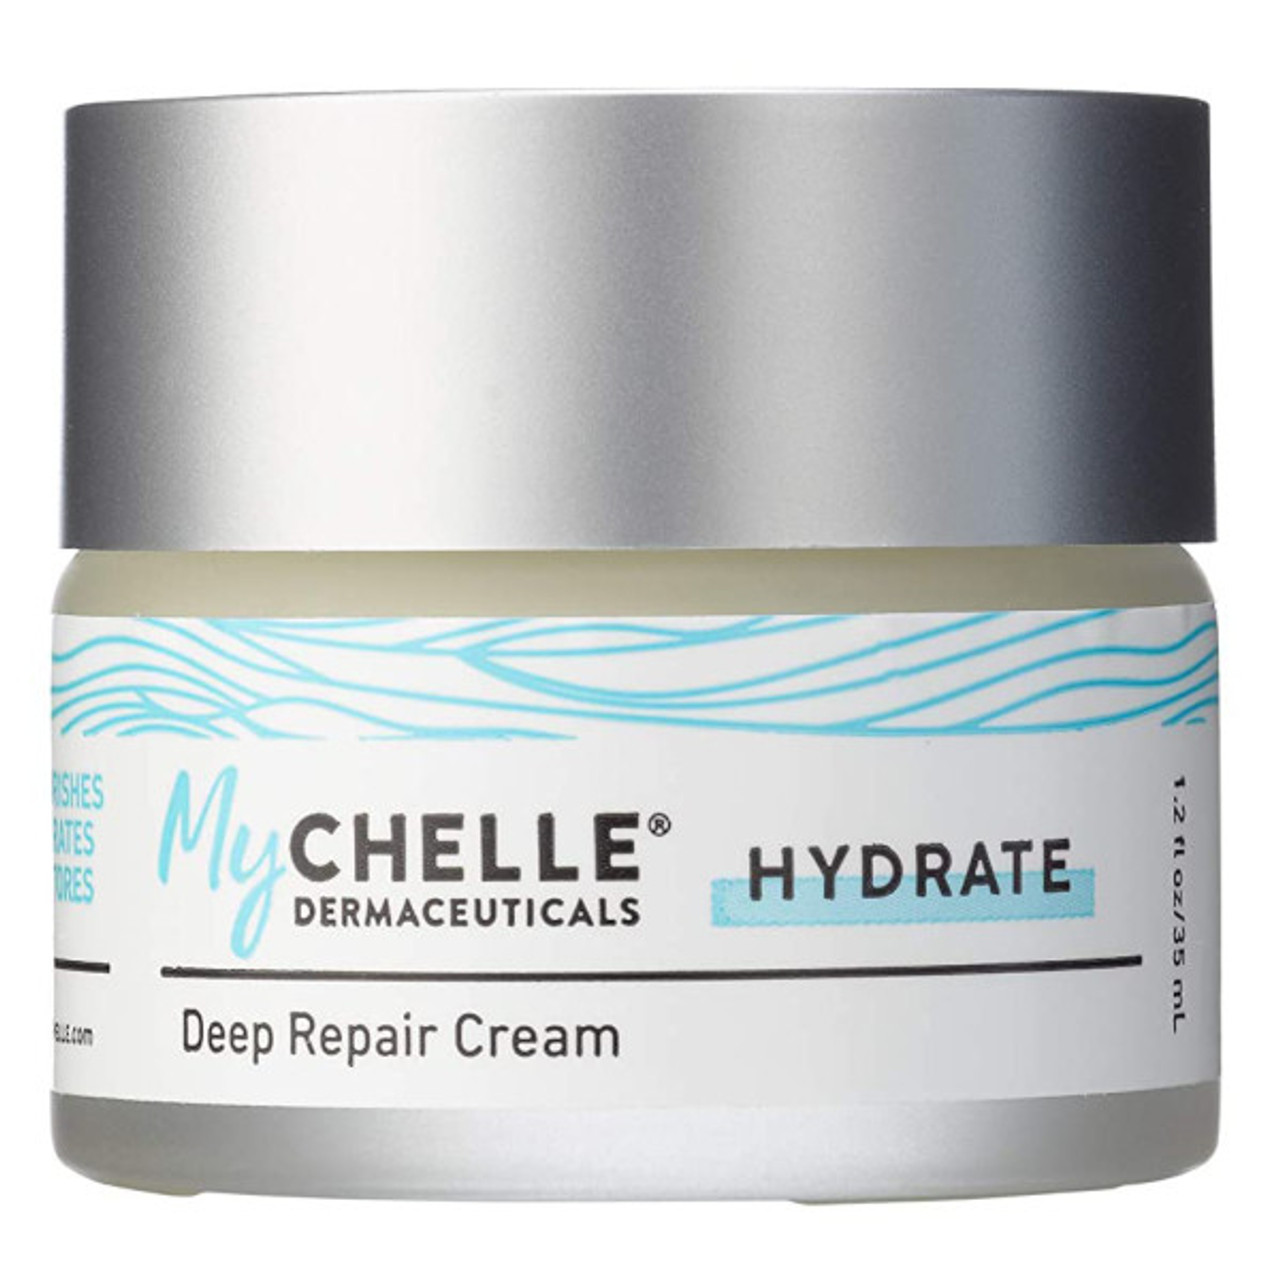 Mychelle Dermaceuticals Deep Repair Cream - 1.2 oz